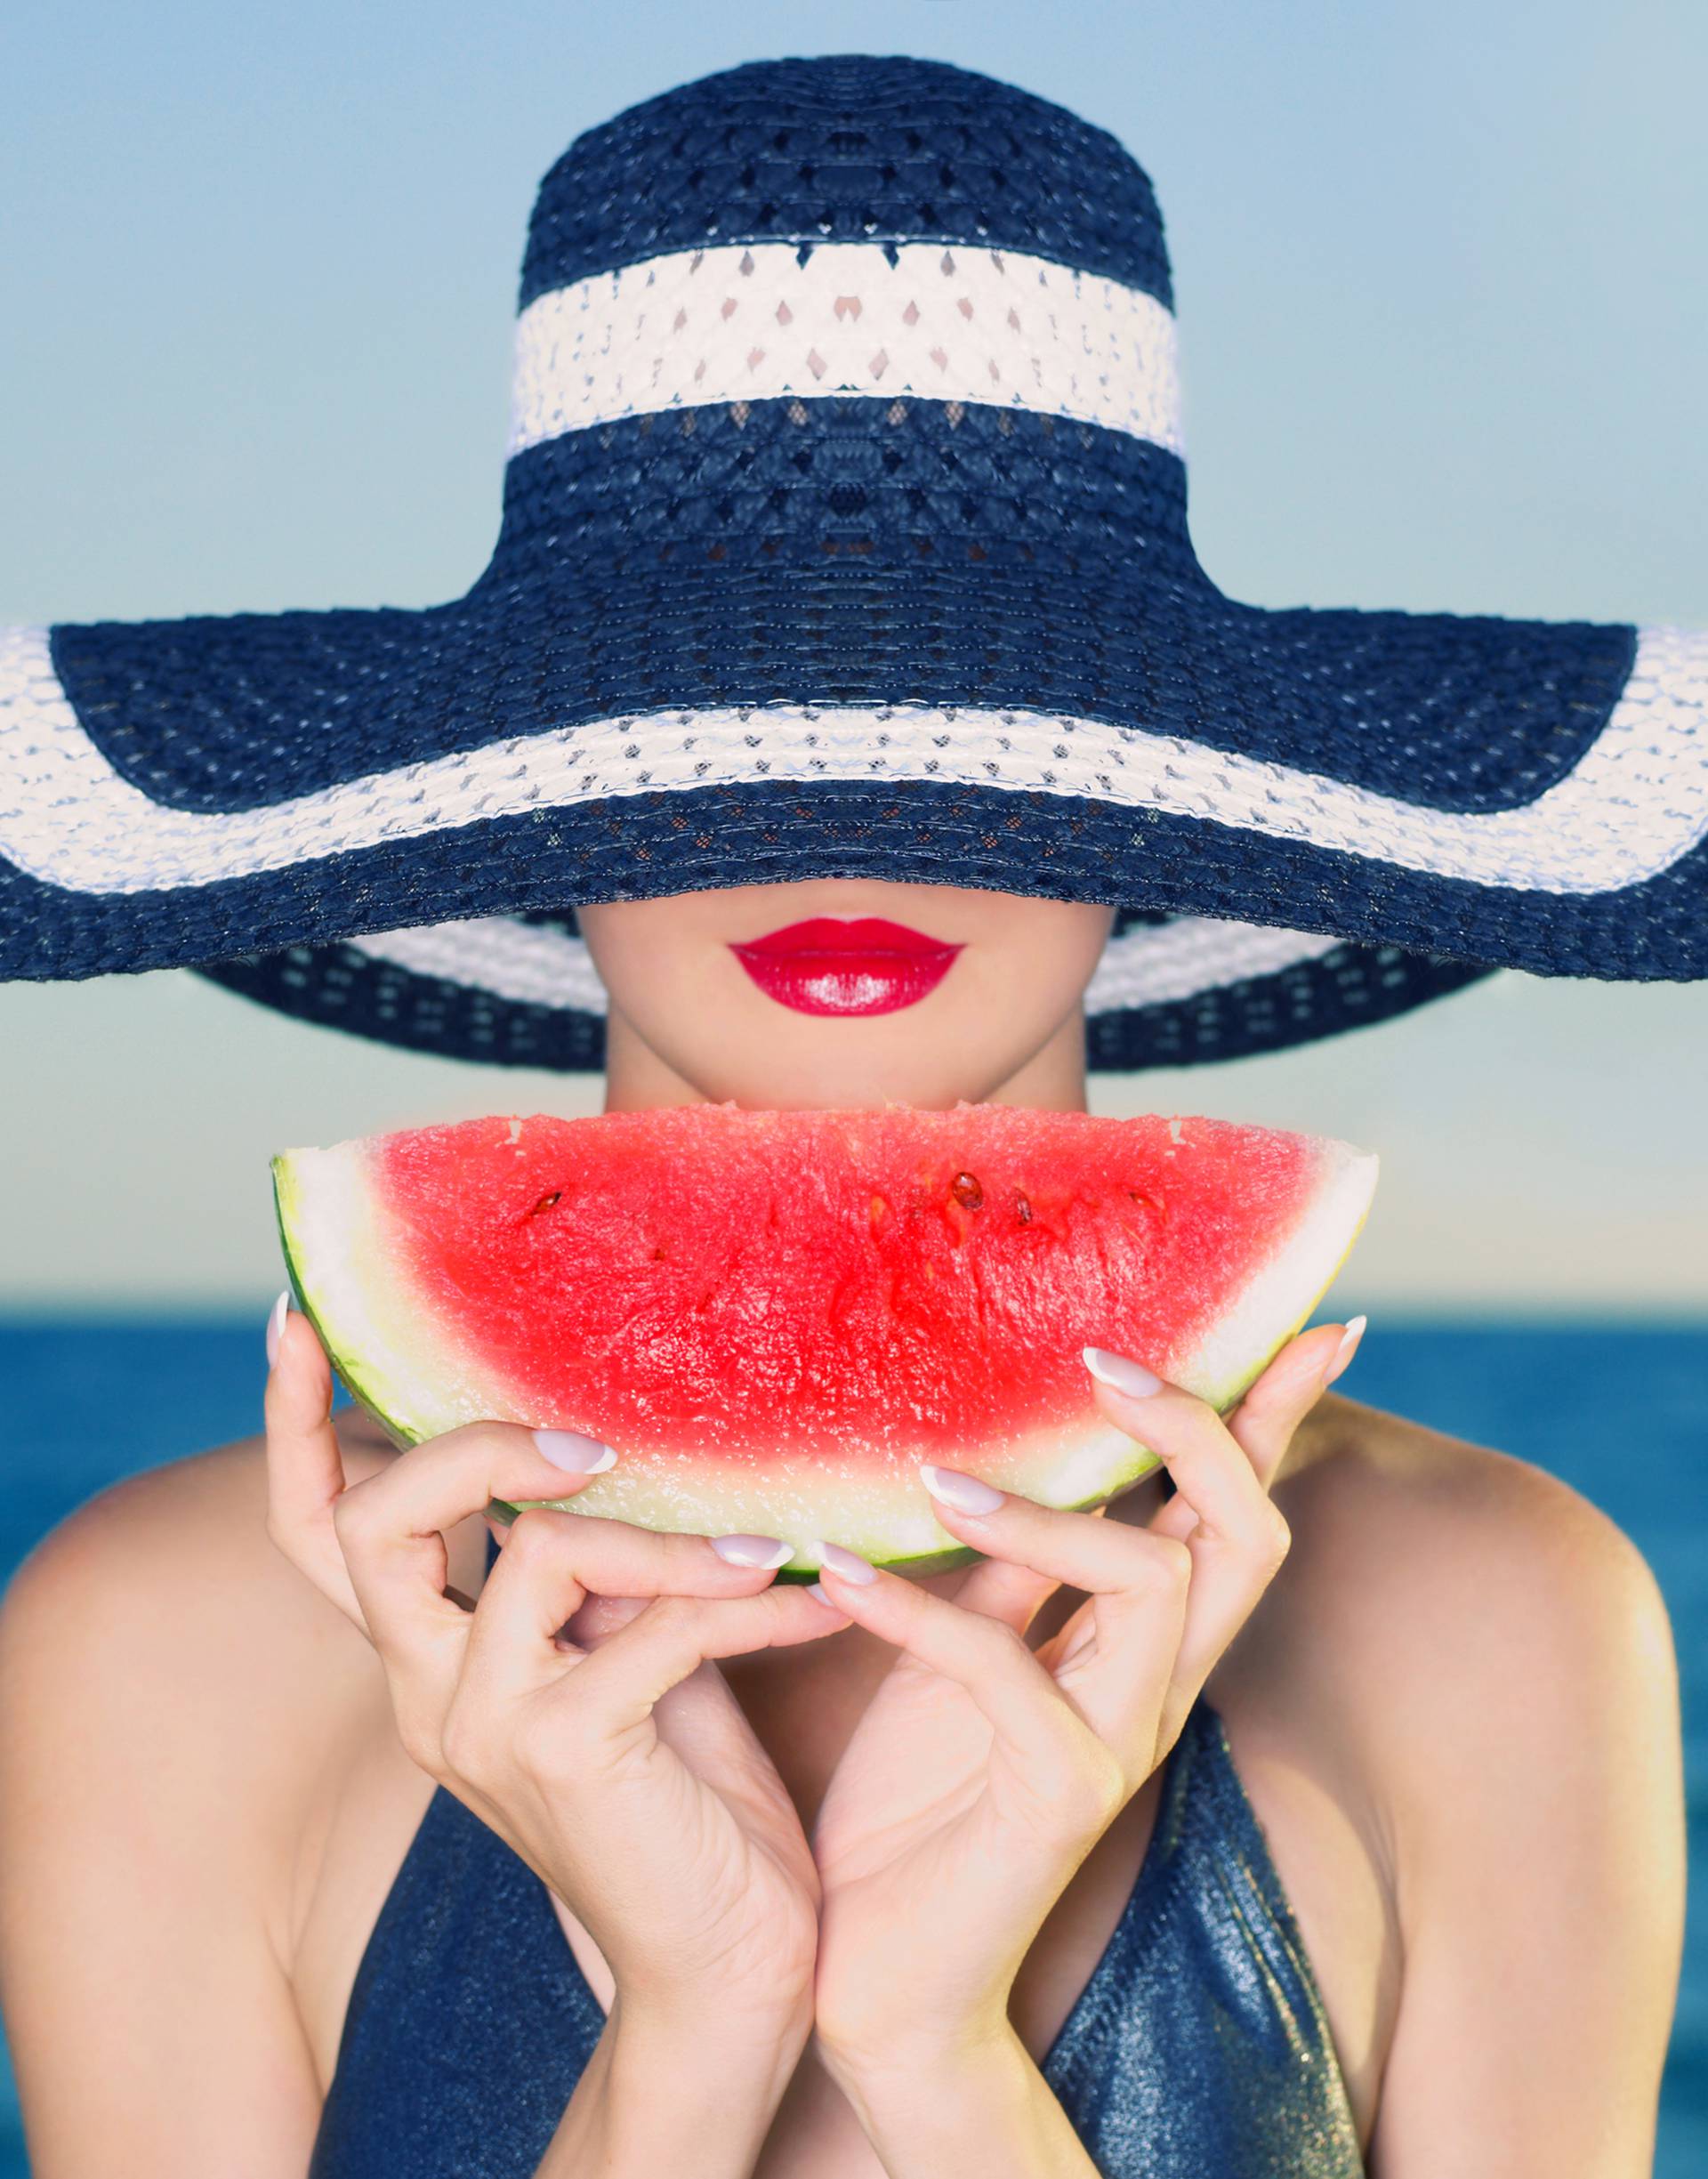 9 pravila dobre prehrane ljeti: Jedite krto meso i bez prženog